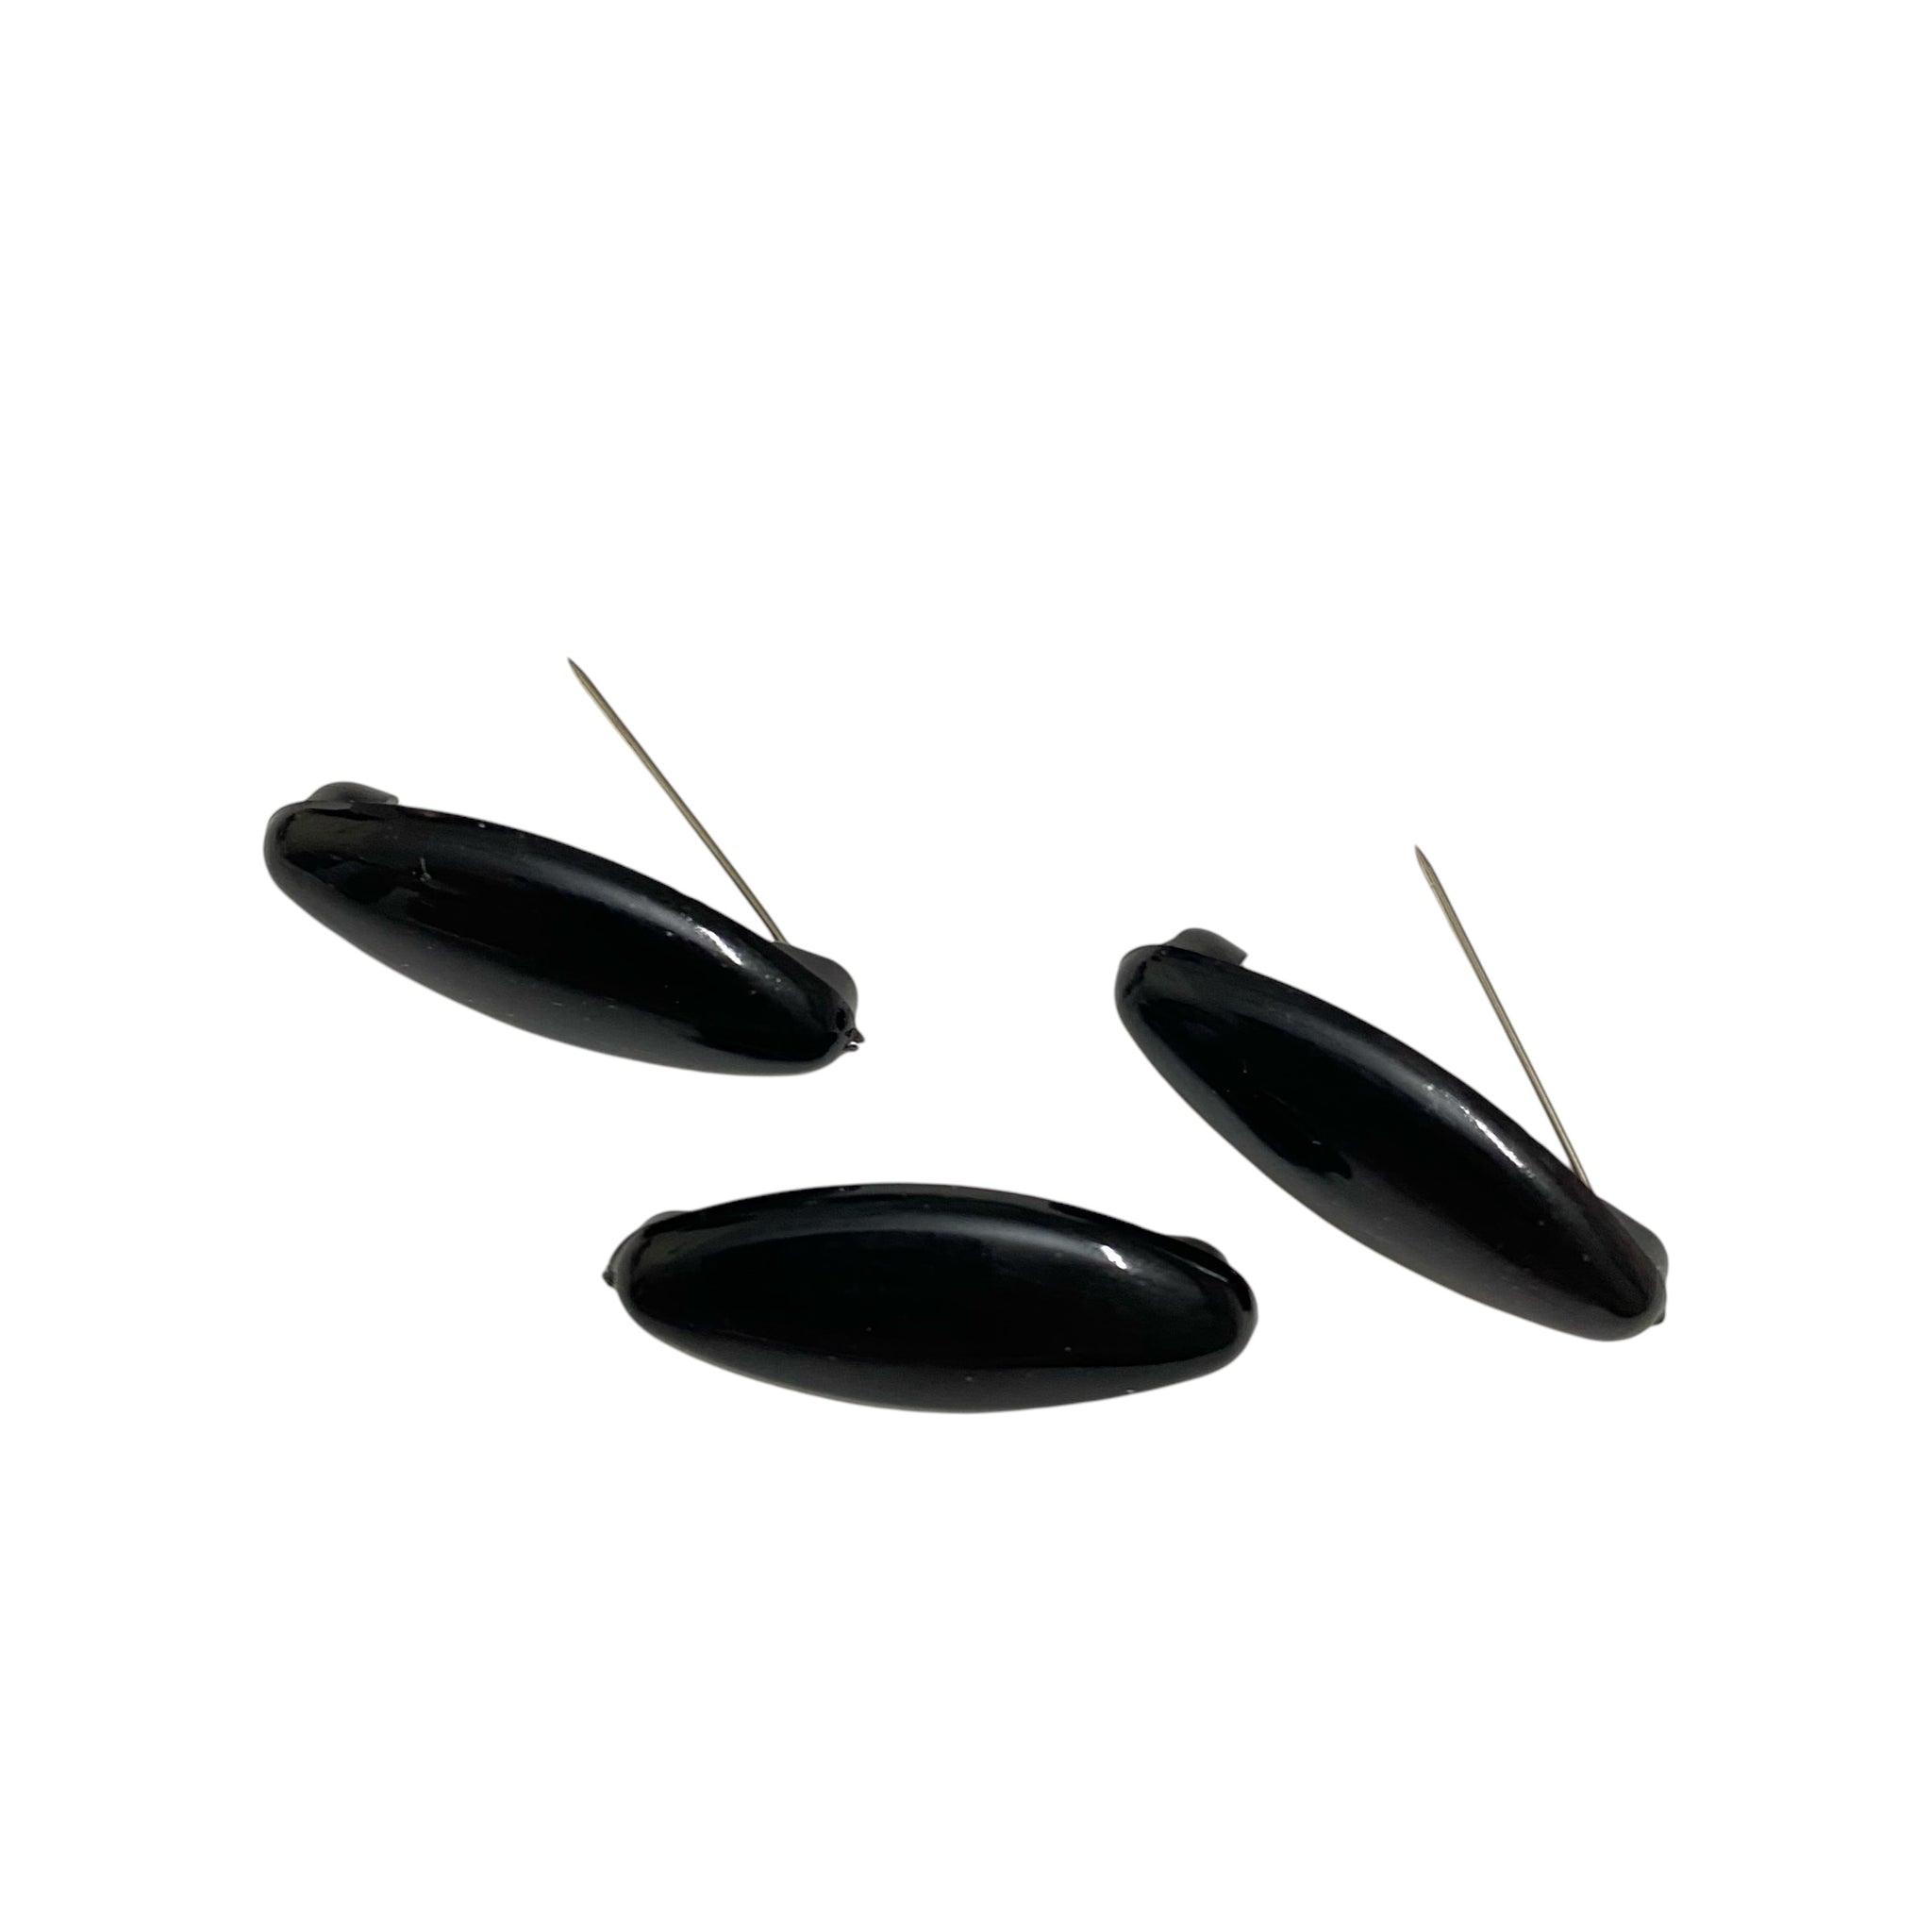 Plain Safety Pins - Black